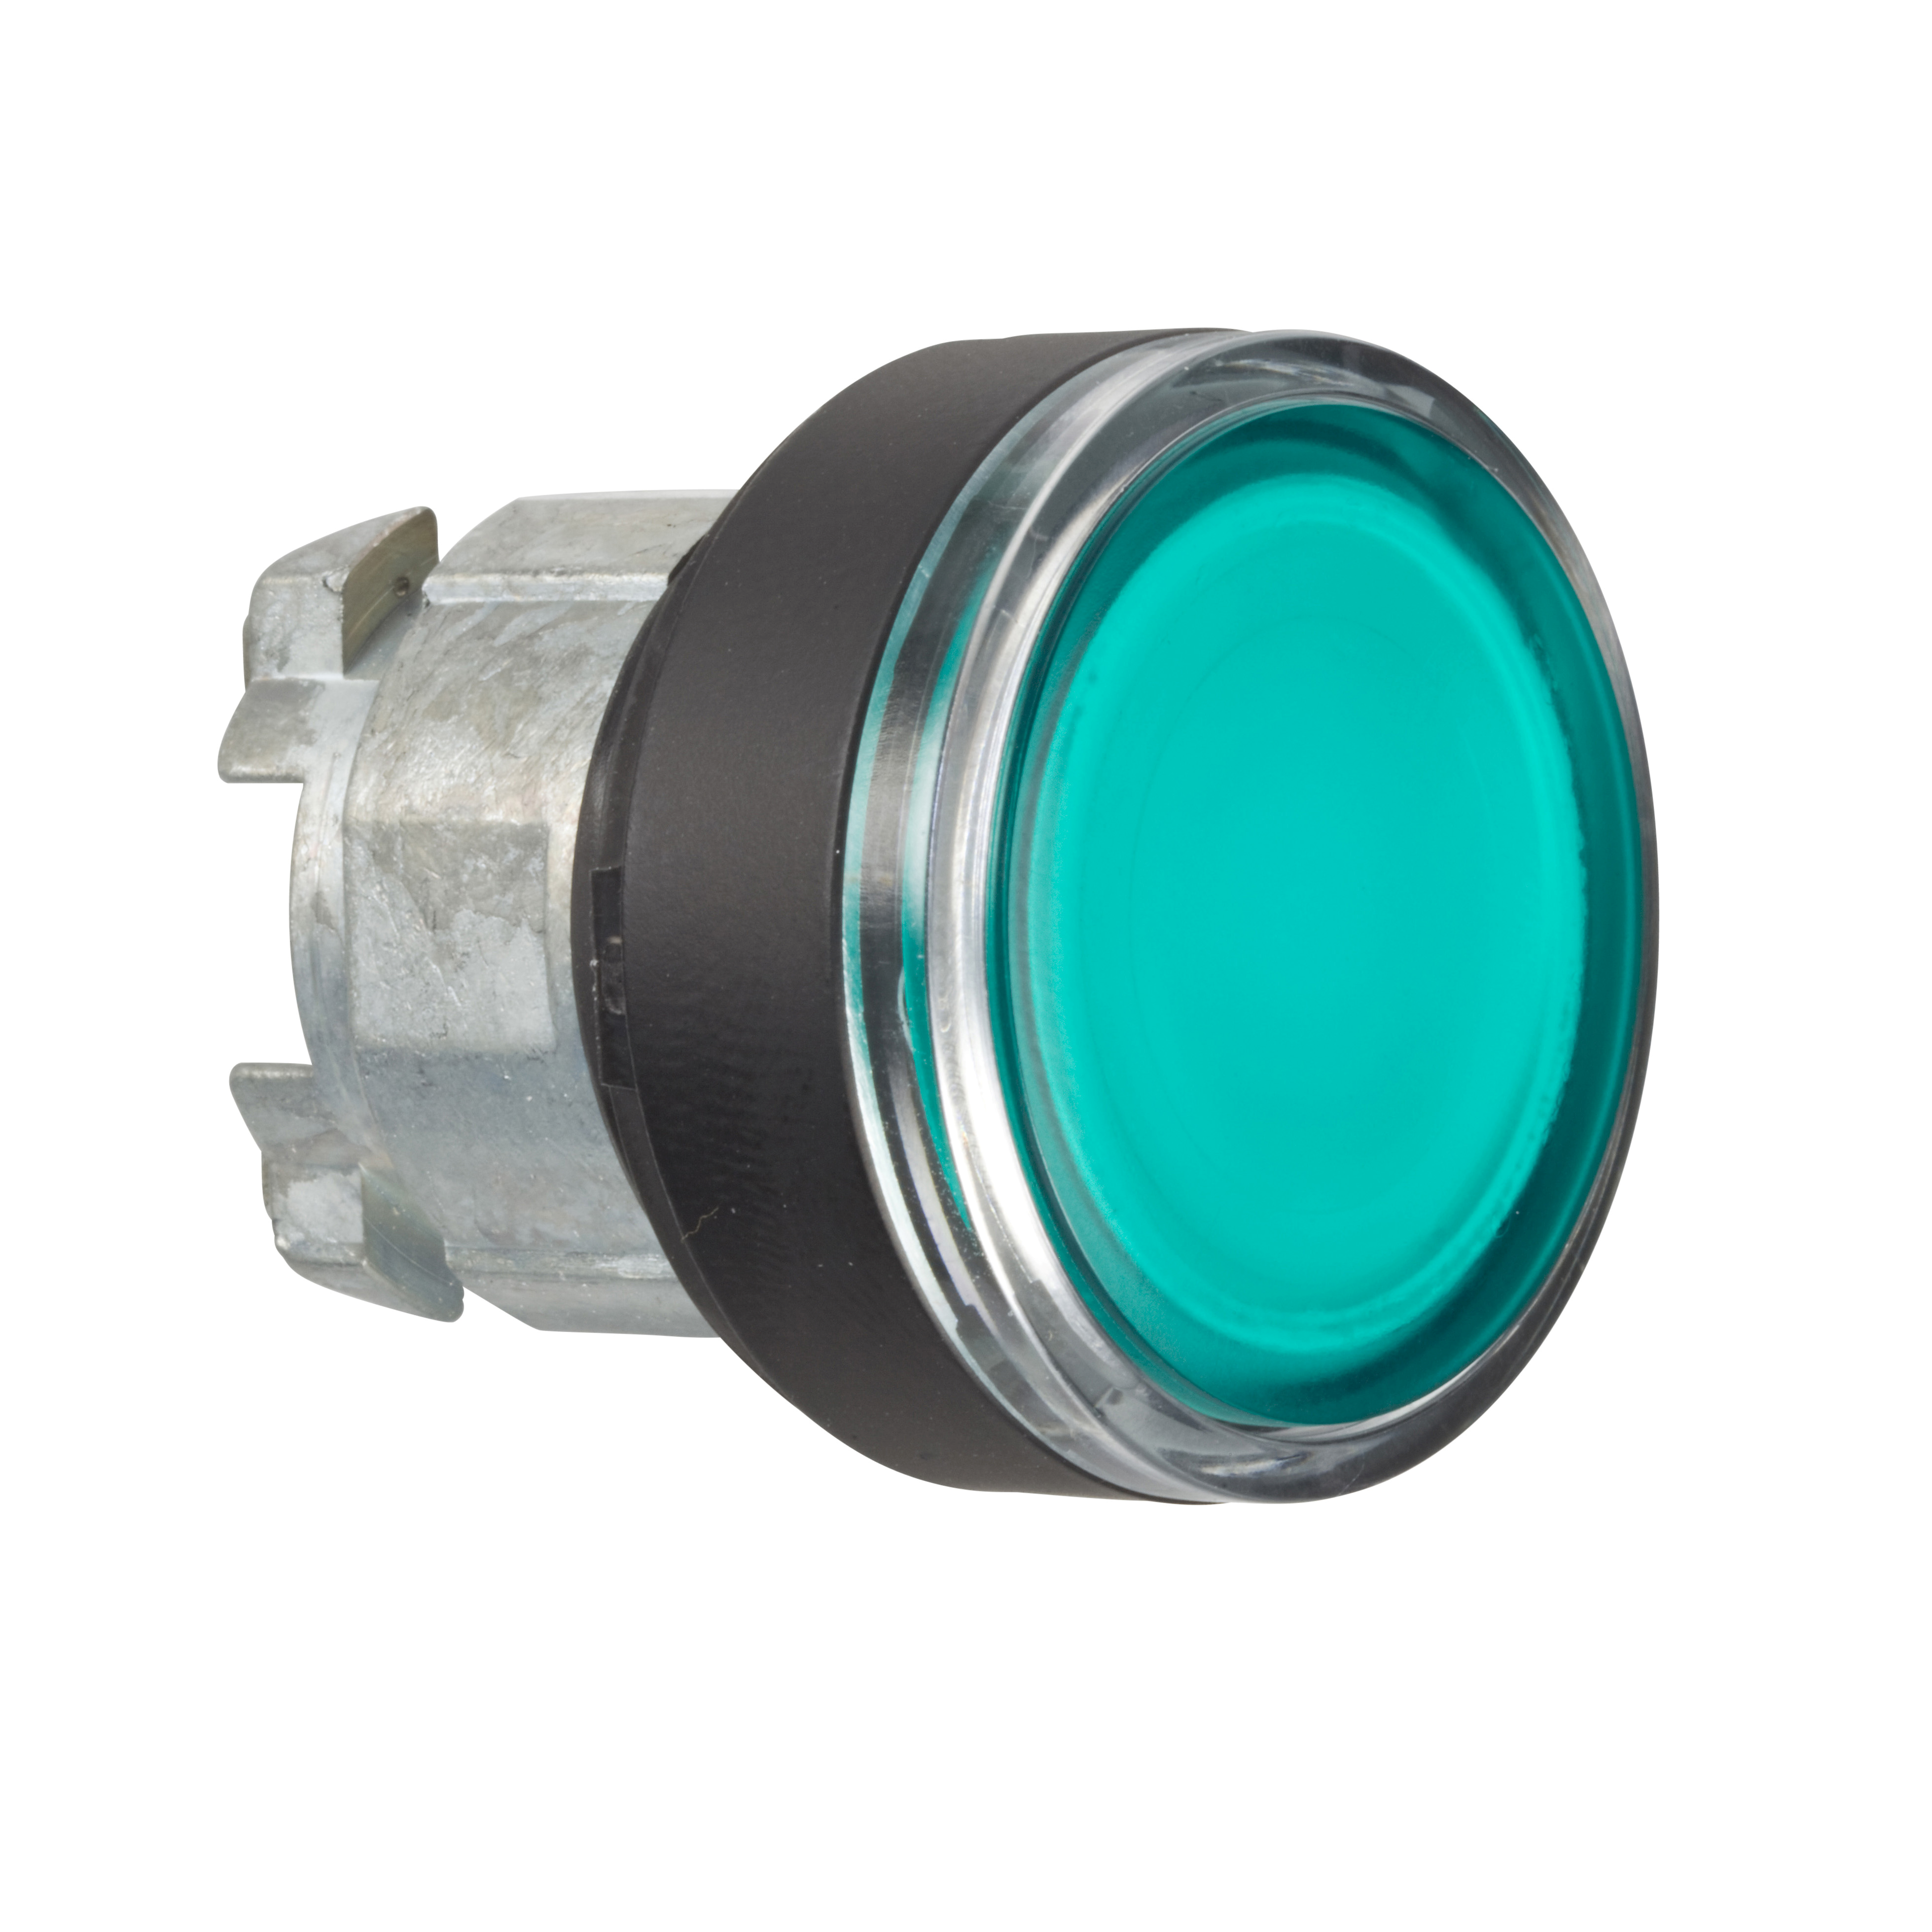 Head for illuminated push button, Harmony XB4, green flush pushbutton Ø22 mm spring return BA9s bulb